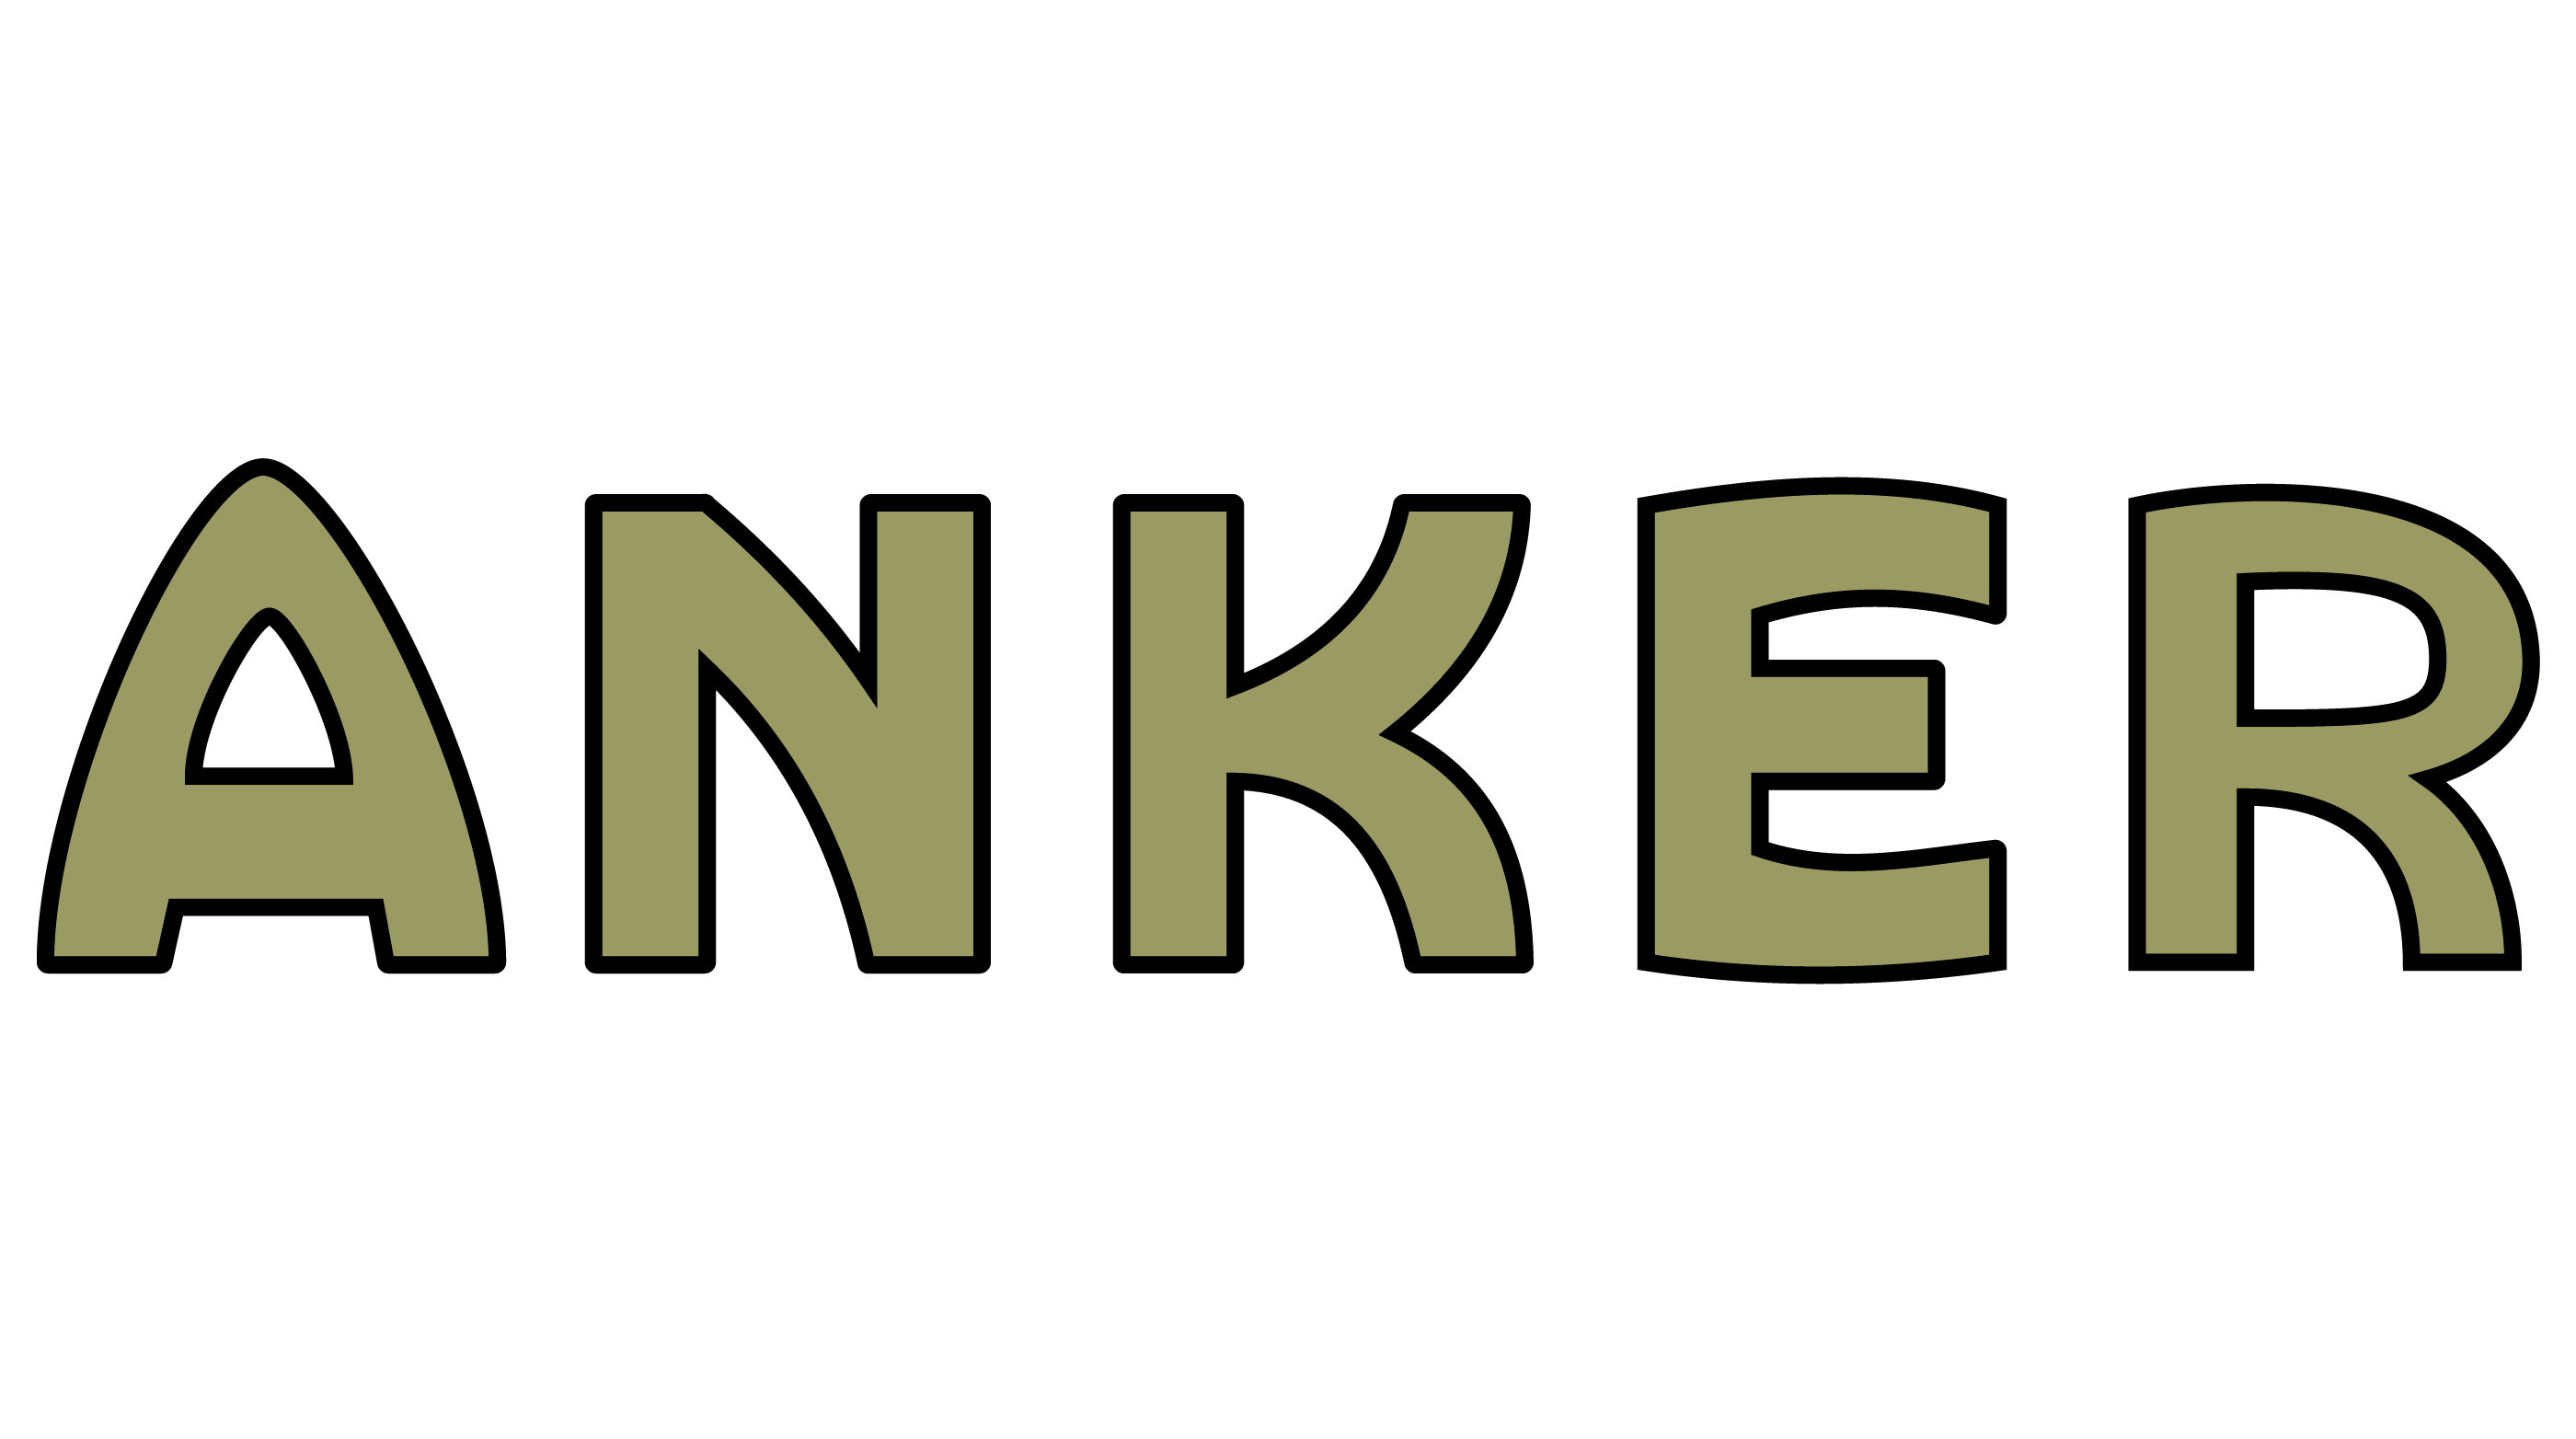 Anker Motorcycle Logo: 2800×